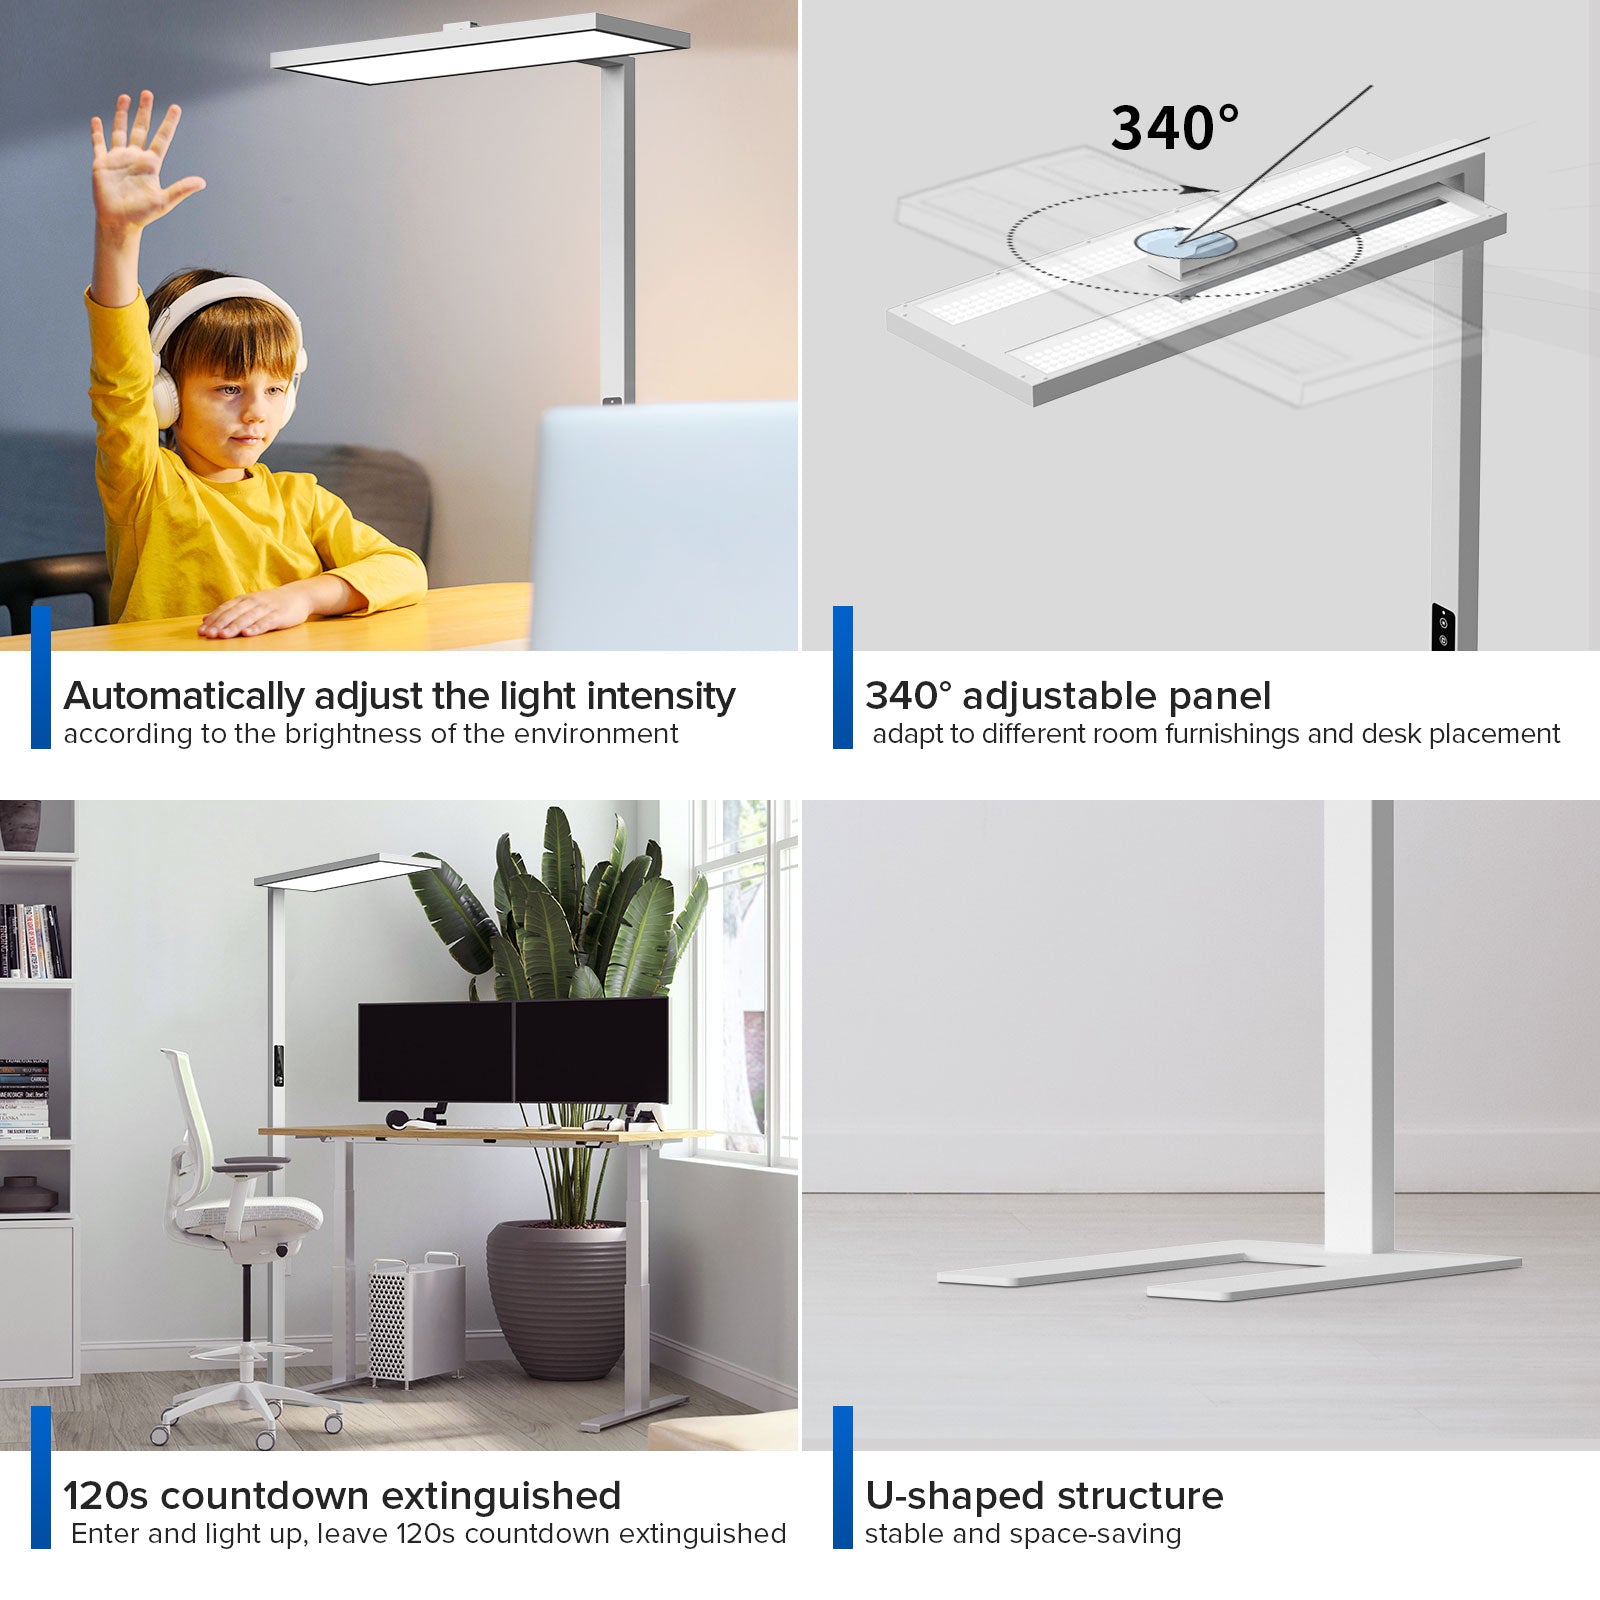 Vertical Led Desk Lamp, automatically adjust the light intensity, 340° adjustable panel